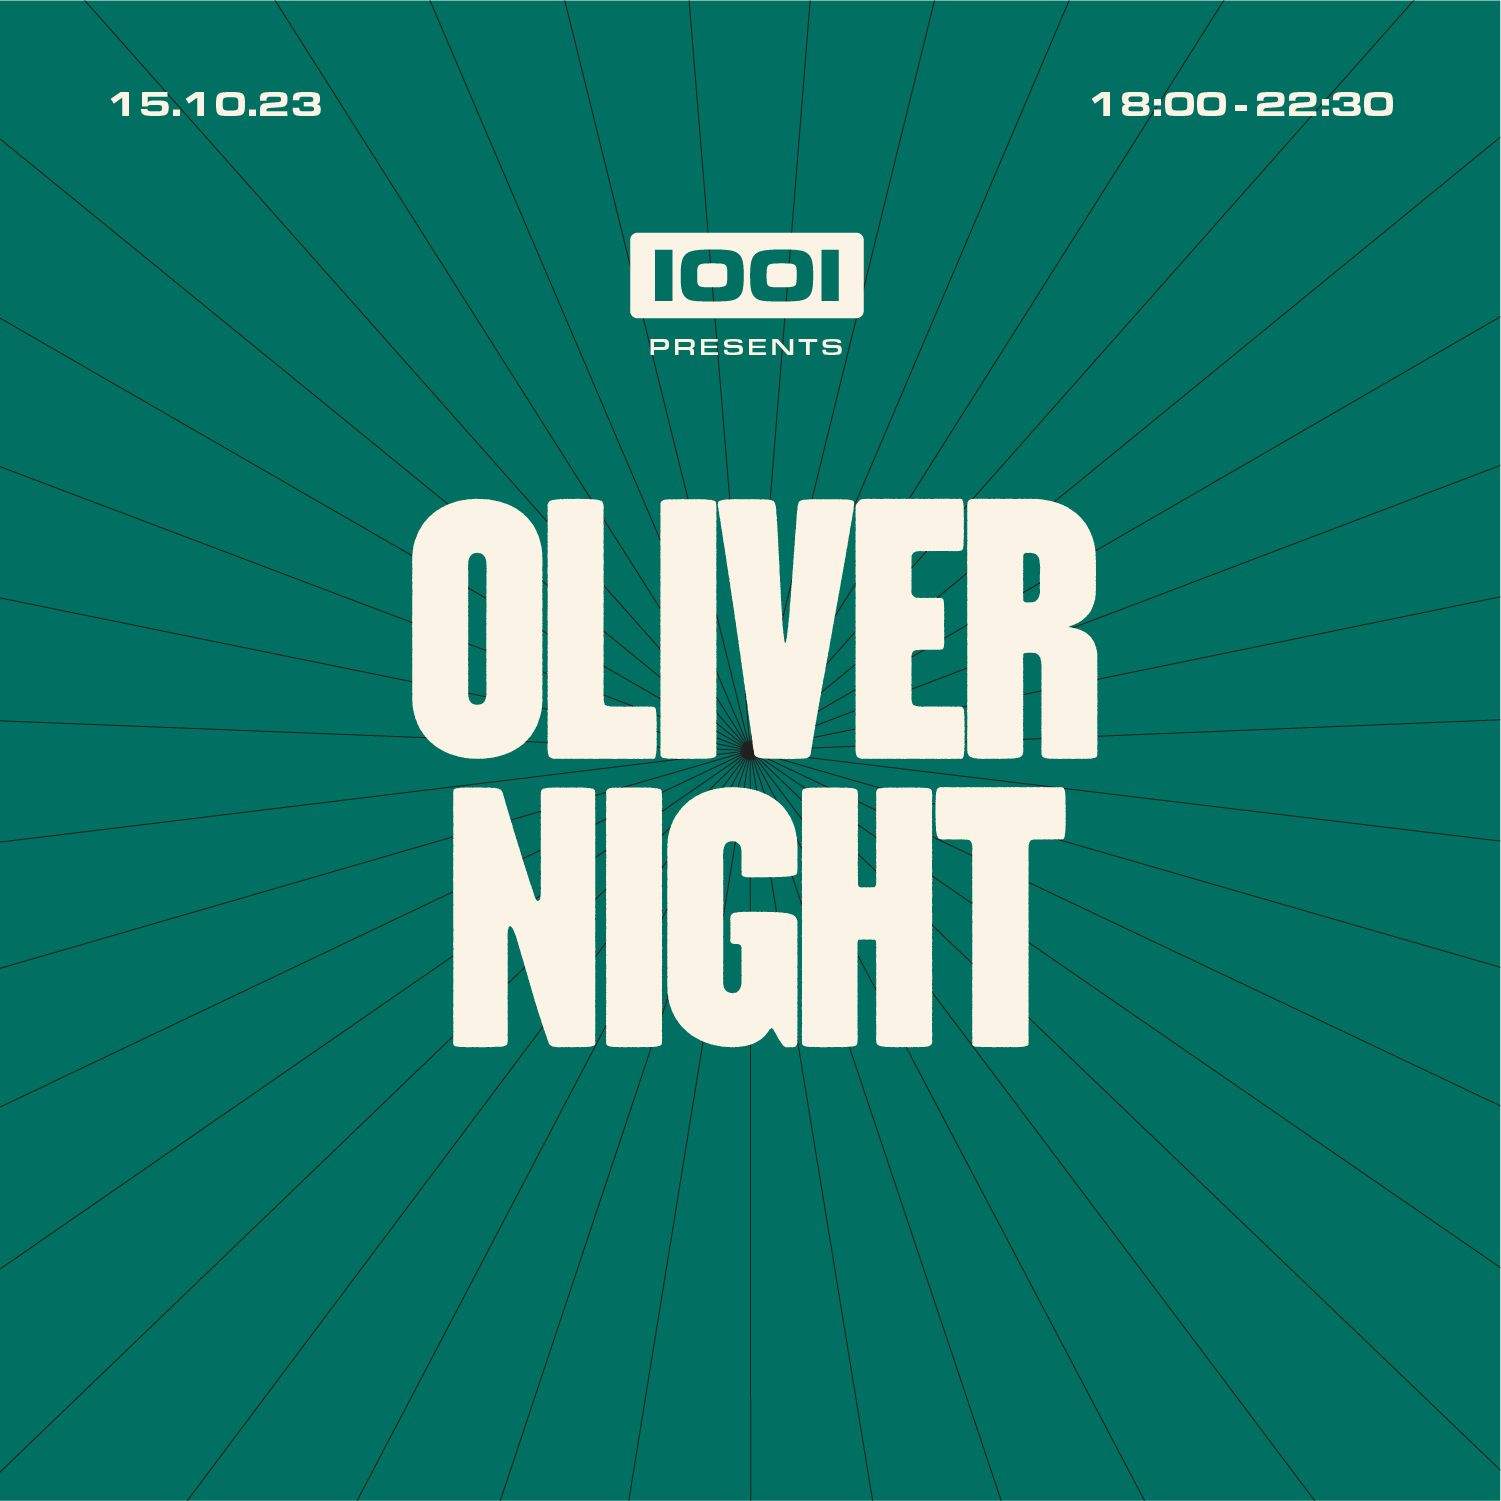 1001 presents Oliver Night - フライヤー裏